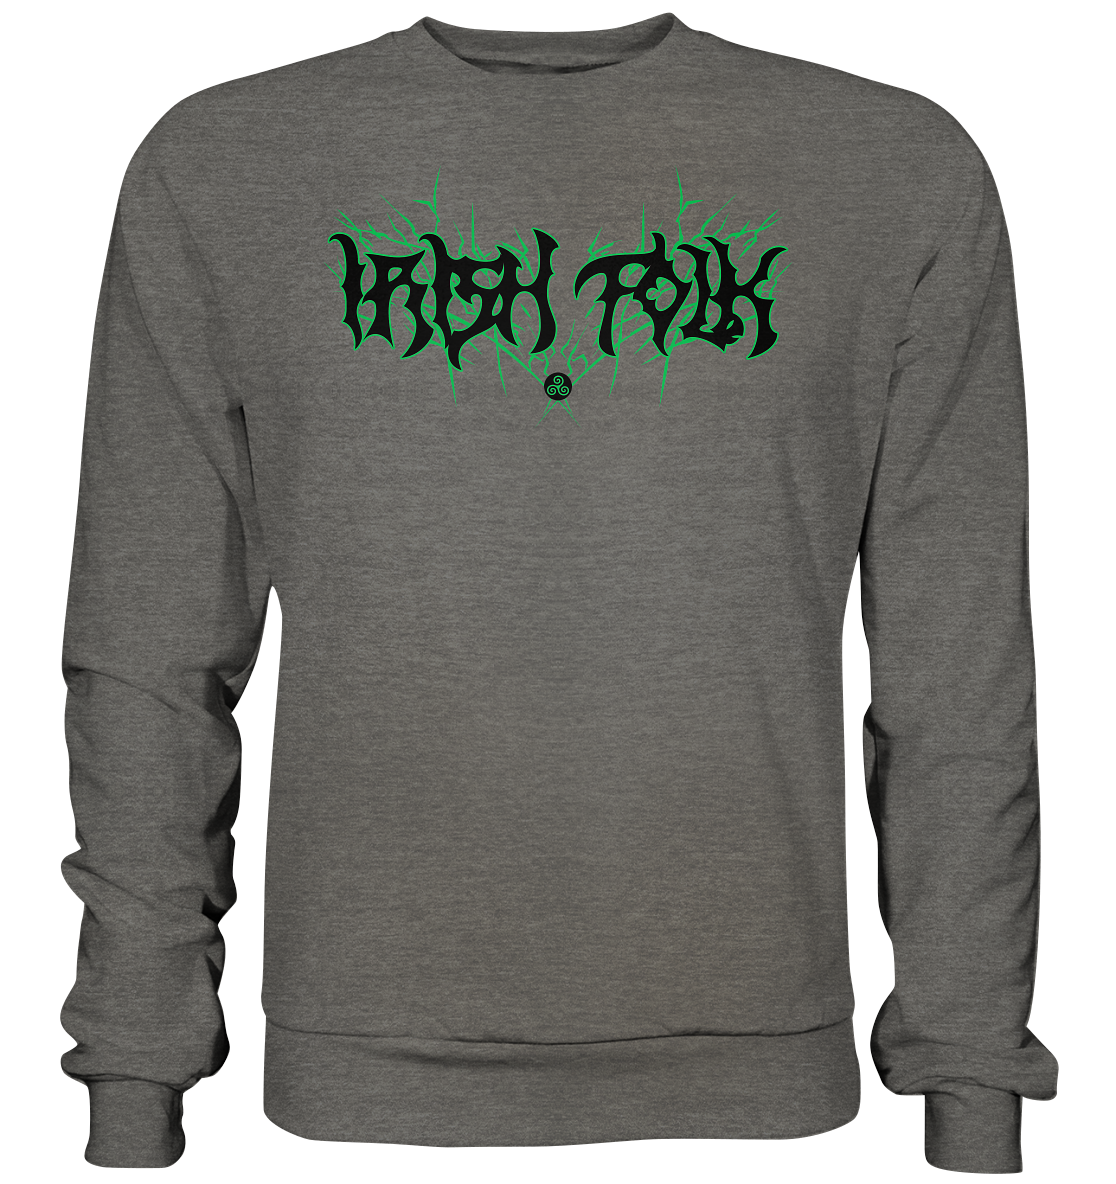 Irish Folk "Metal Band" - Basic Sweatshirt